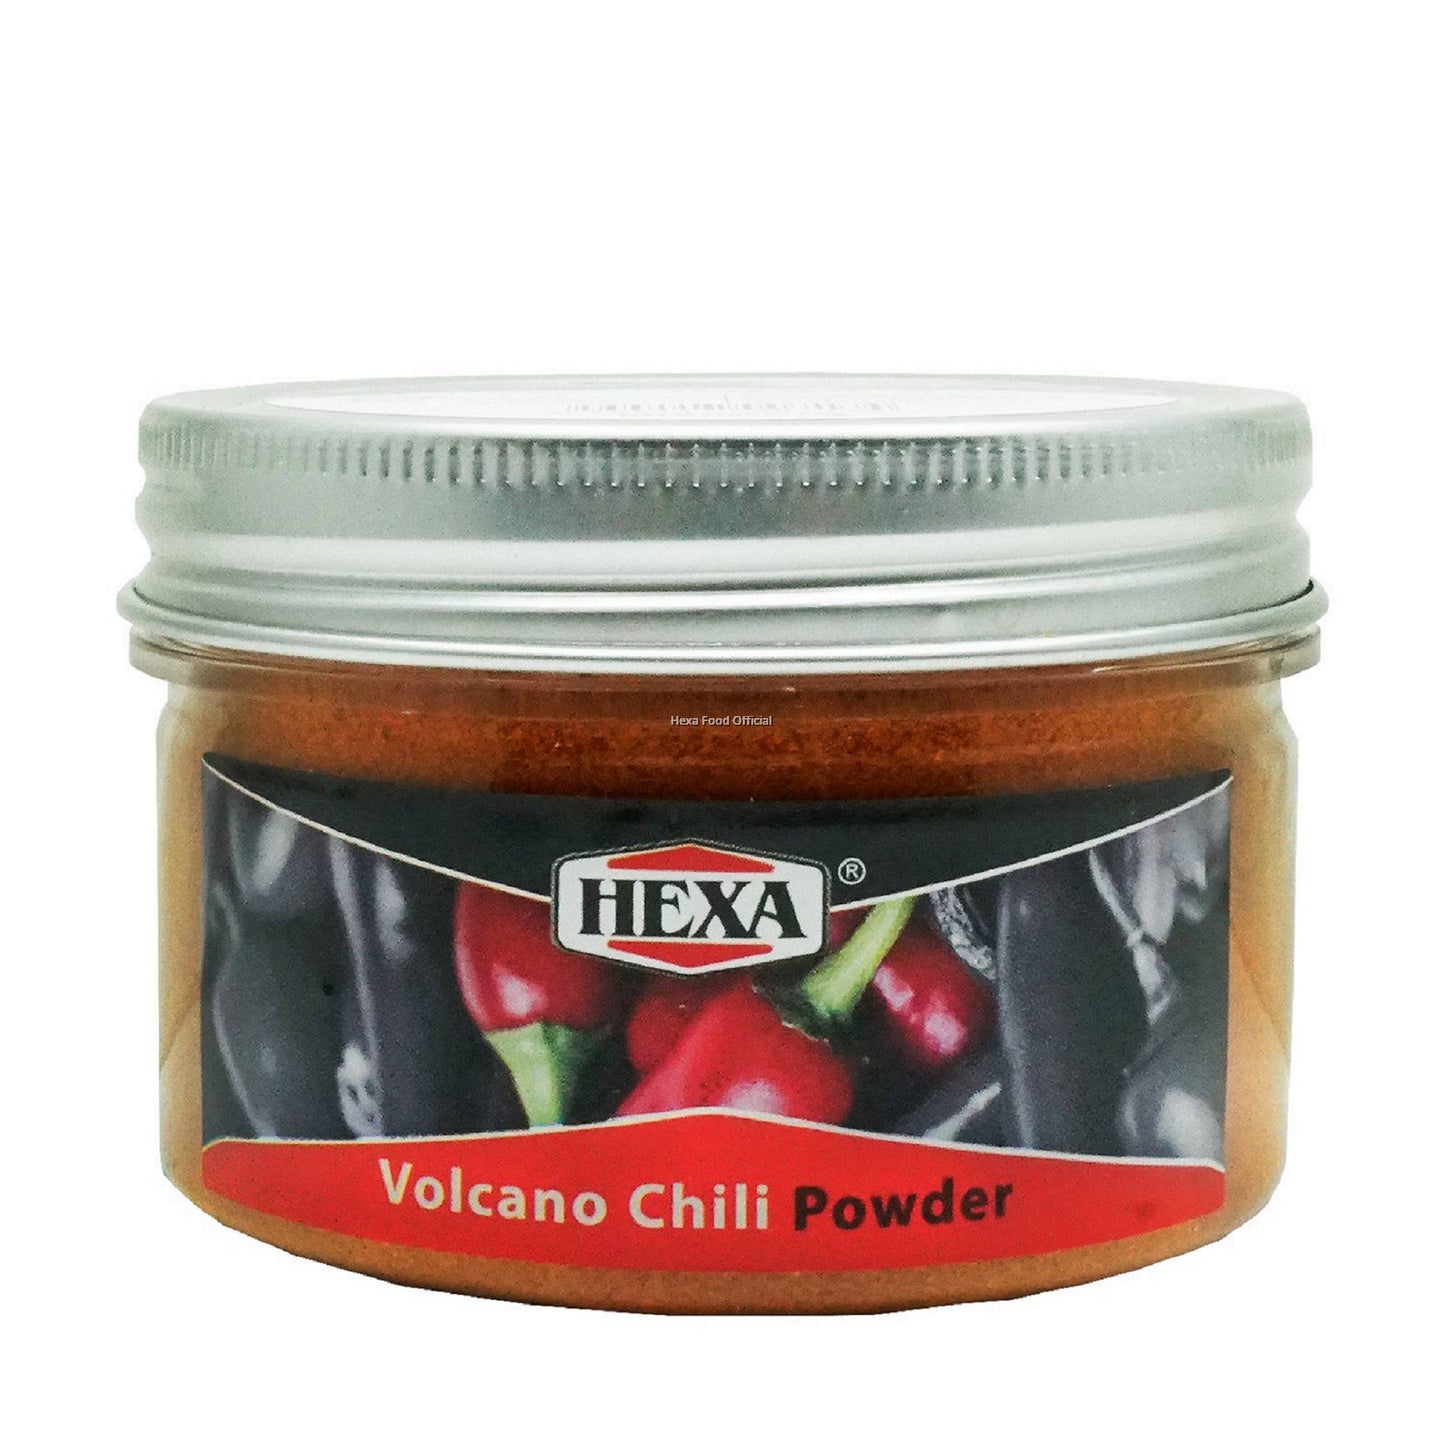 HEXA HALAL Volcano Chili Powder 70gm